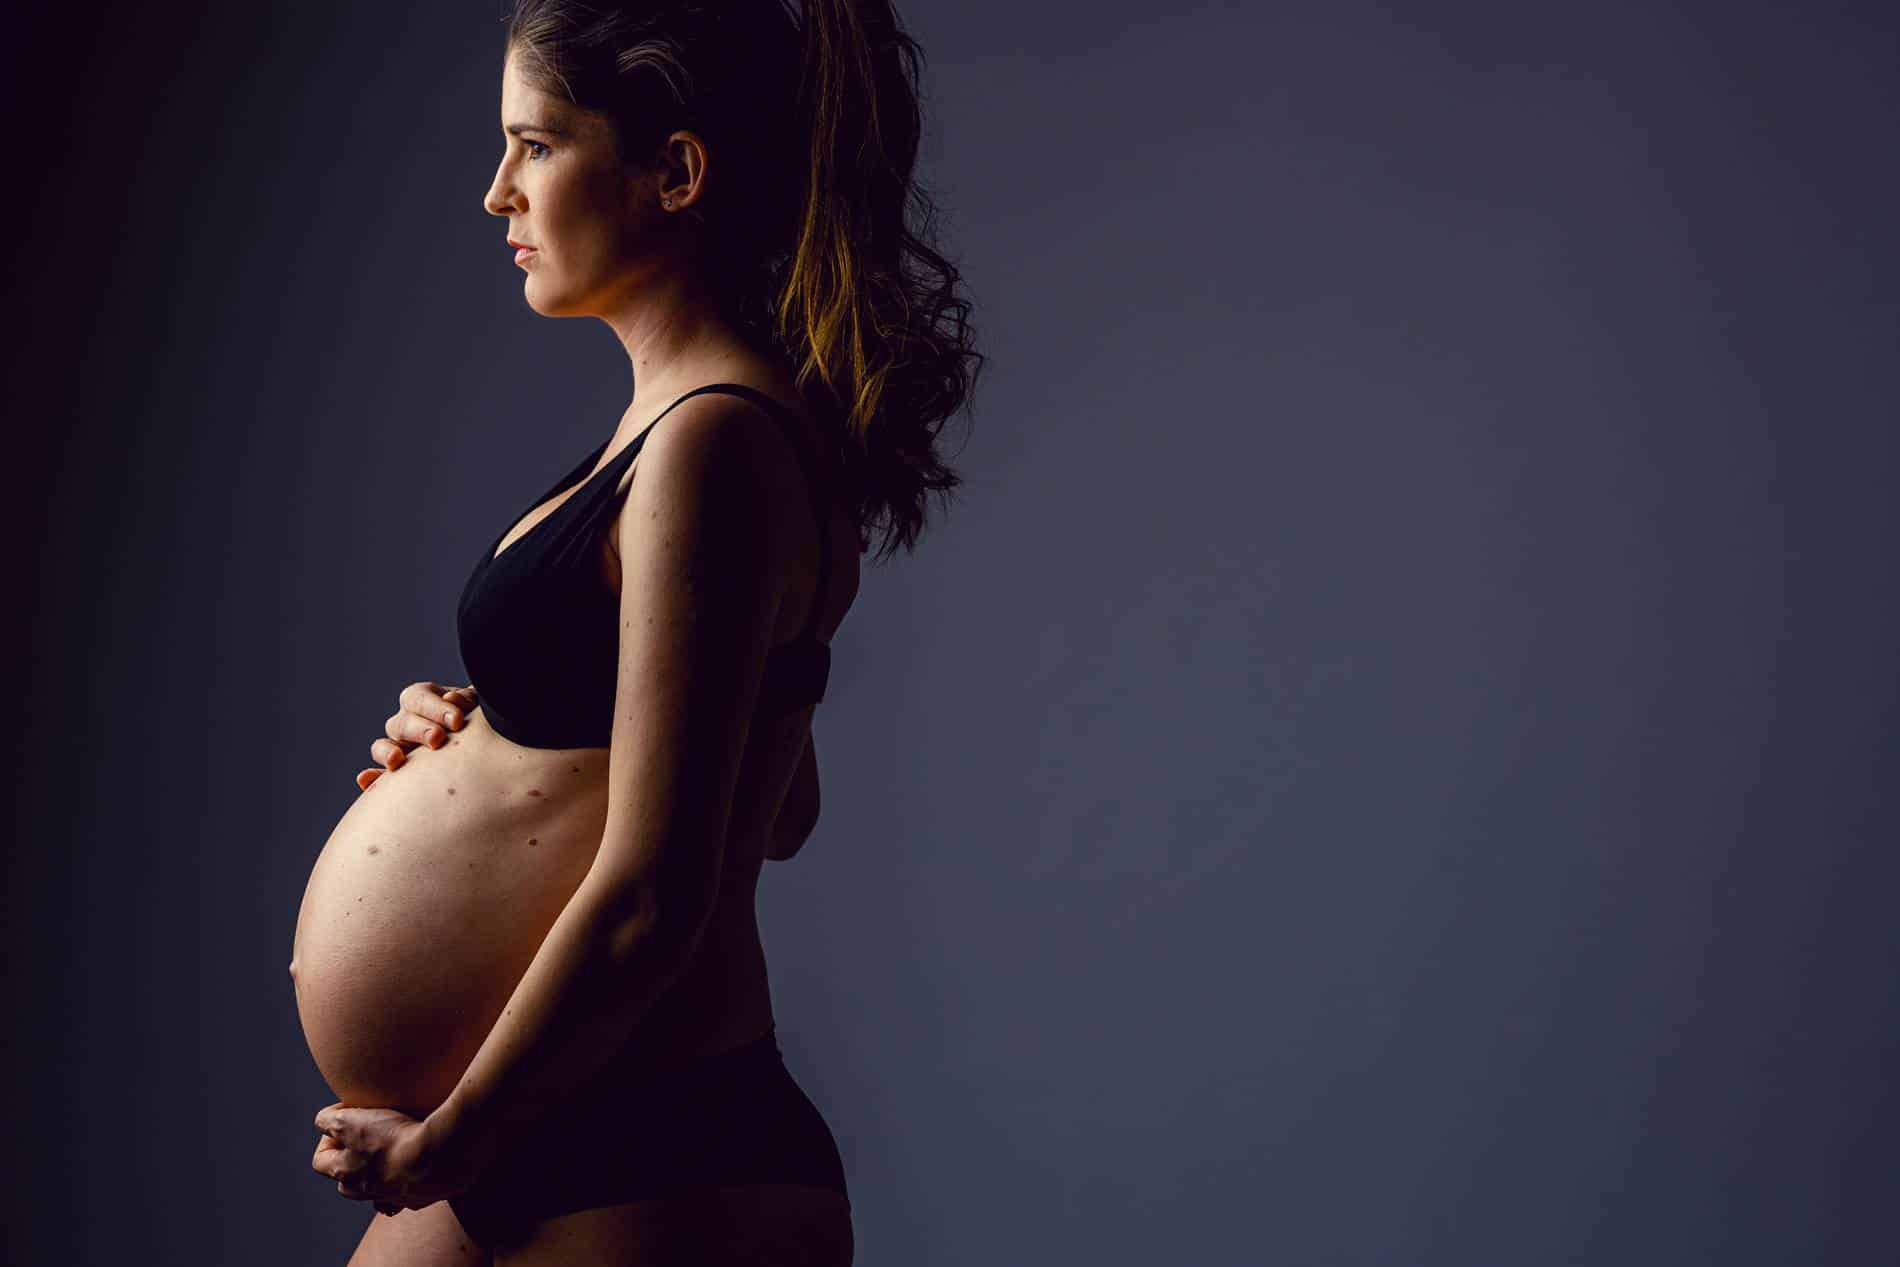 Sesión de fotos para embarazadas - Fotografía premamá